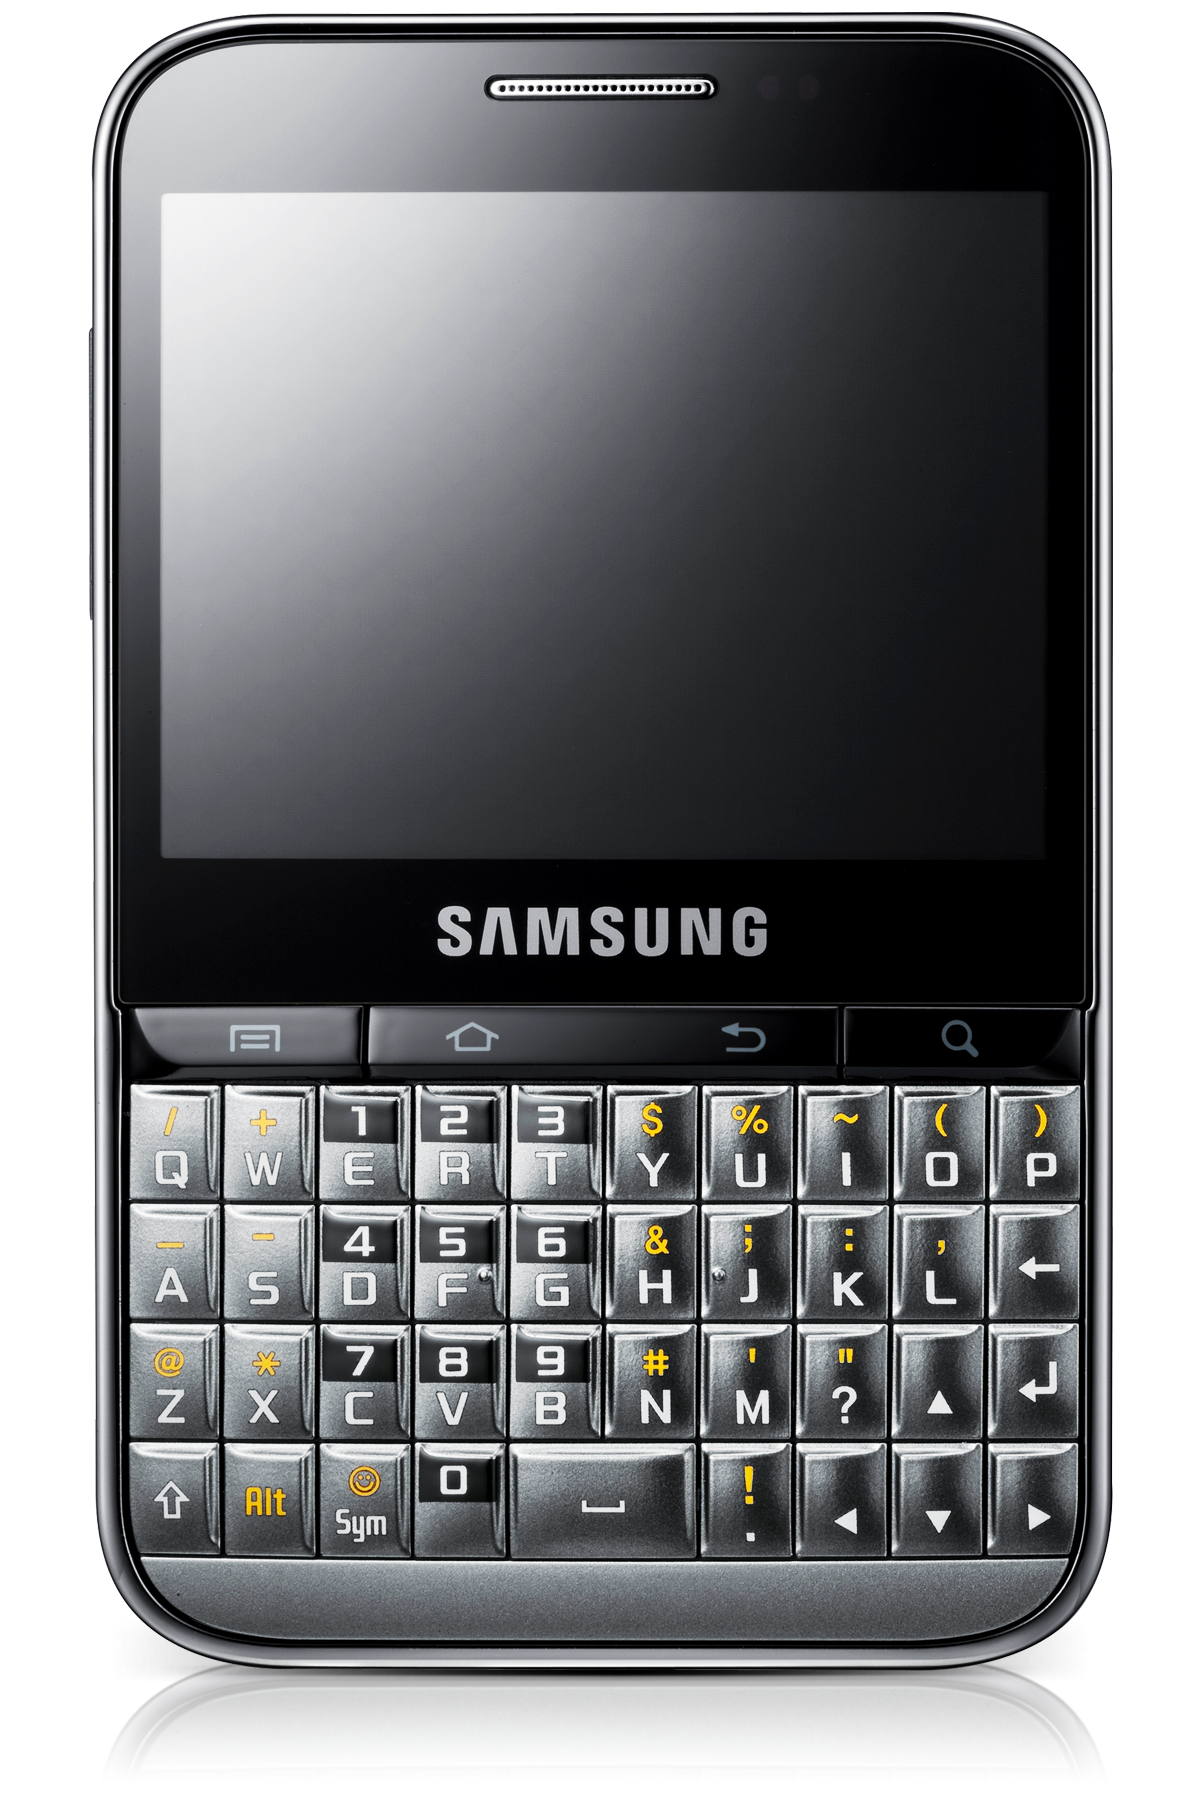 Кнопочный без андроид. Samsung Galaxy Pro b7510. Samsung Galaxy Pro gt-b7510. Samsung Galaxy Pro 7510. Samsung с кверти клавиатурой.